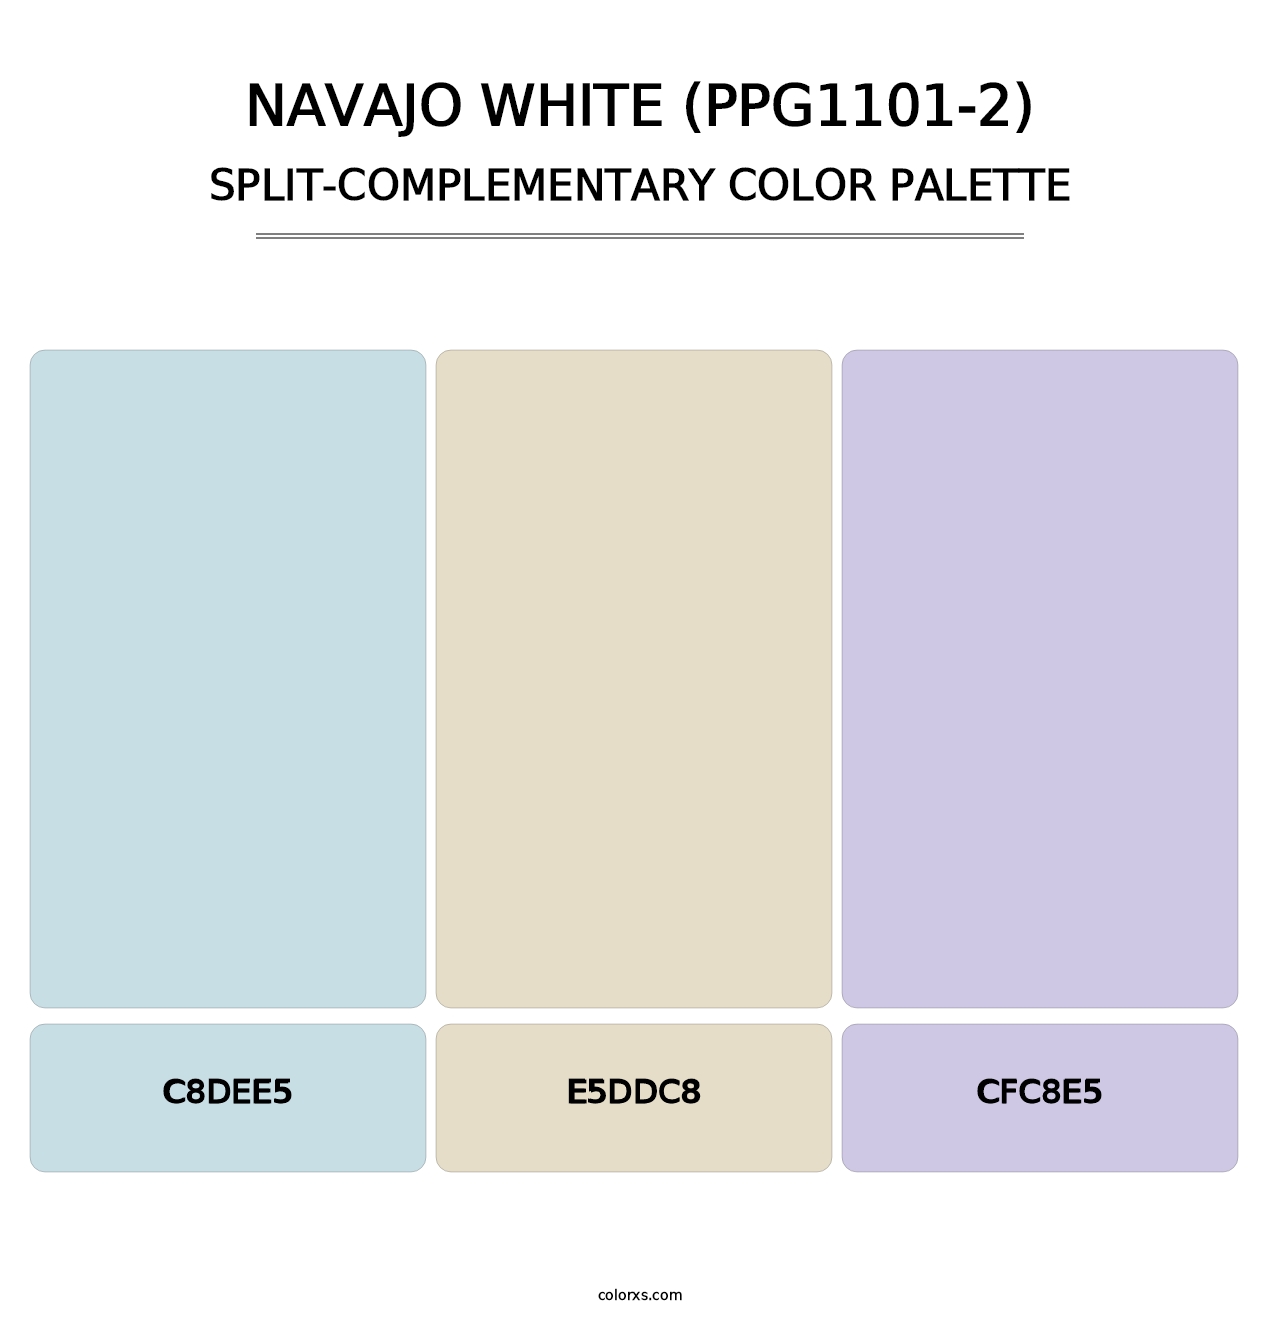 Navajo White (PPG1101-2) - Split-Complementary Color Palette